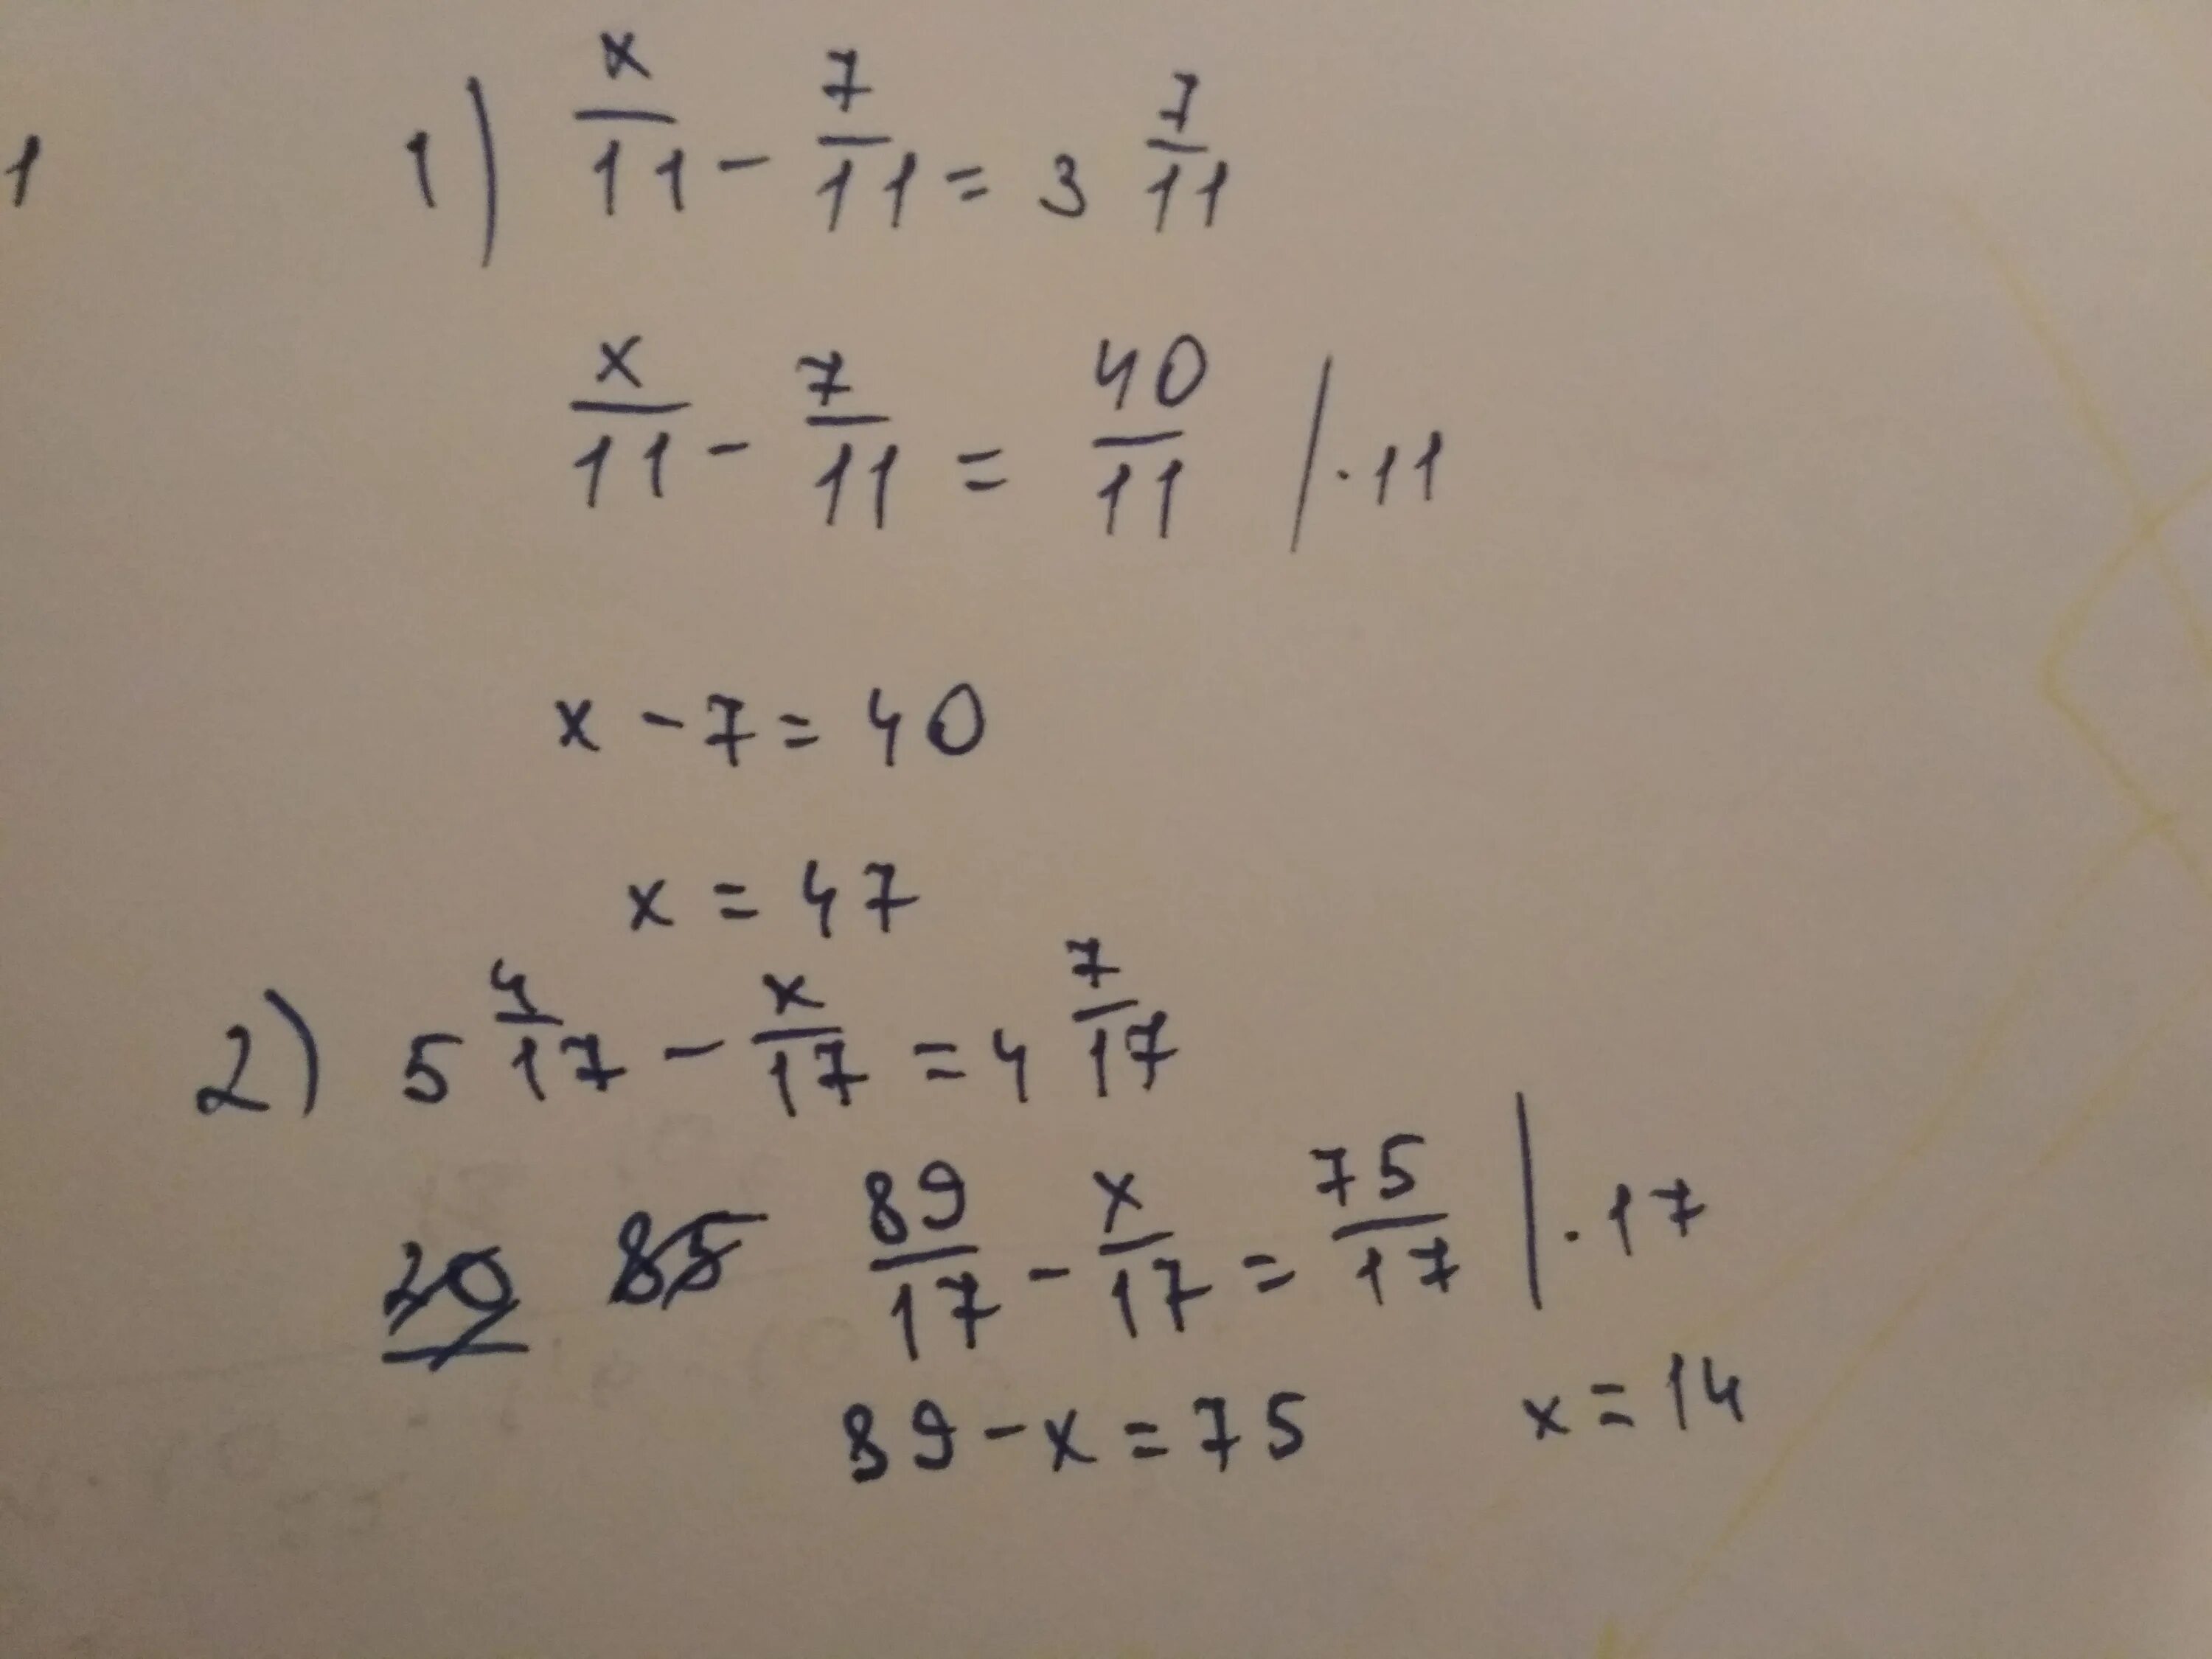 11/Х+4 -11/7. Х-У=7 Х+У=11. Реши уравнение 5:( 2 целых 1/2+x)= 5целых 3/4. -7/11х=1 3/11.